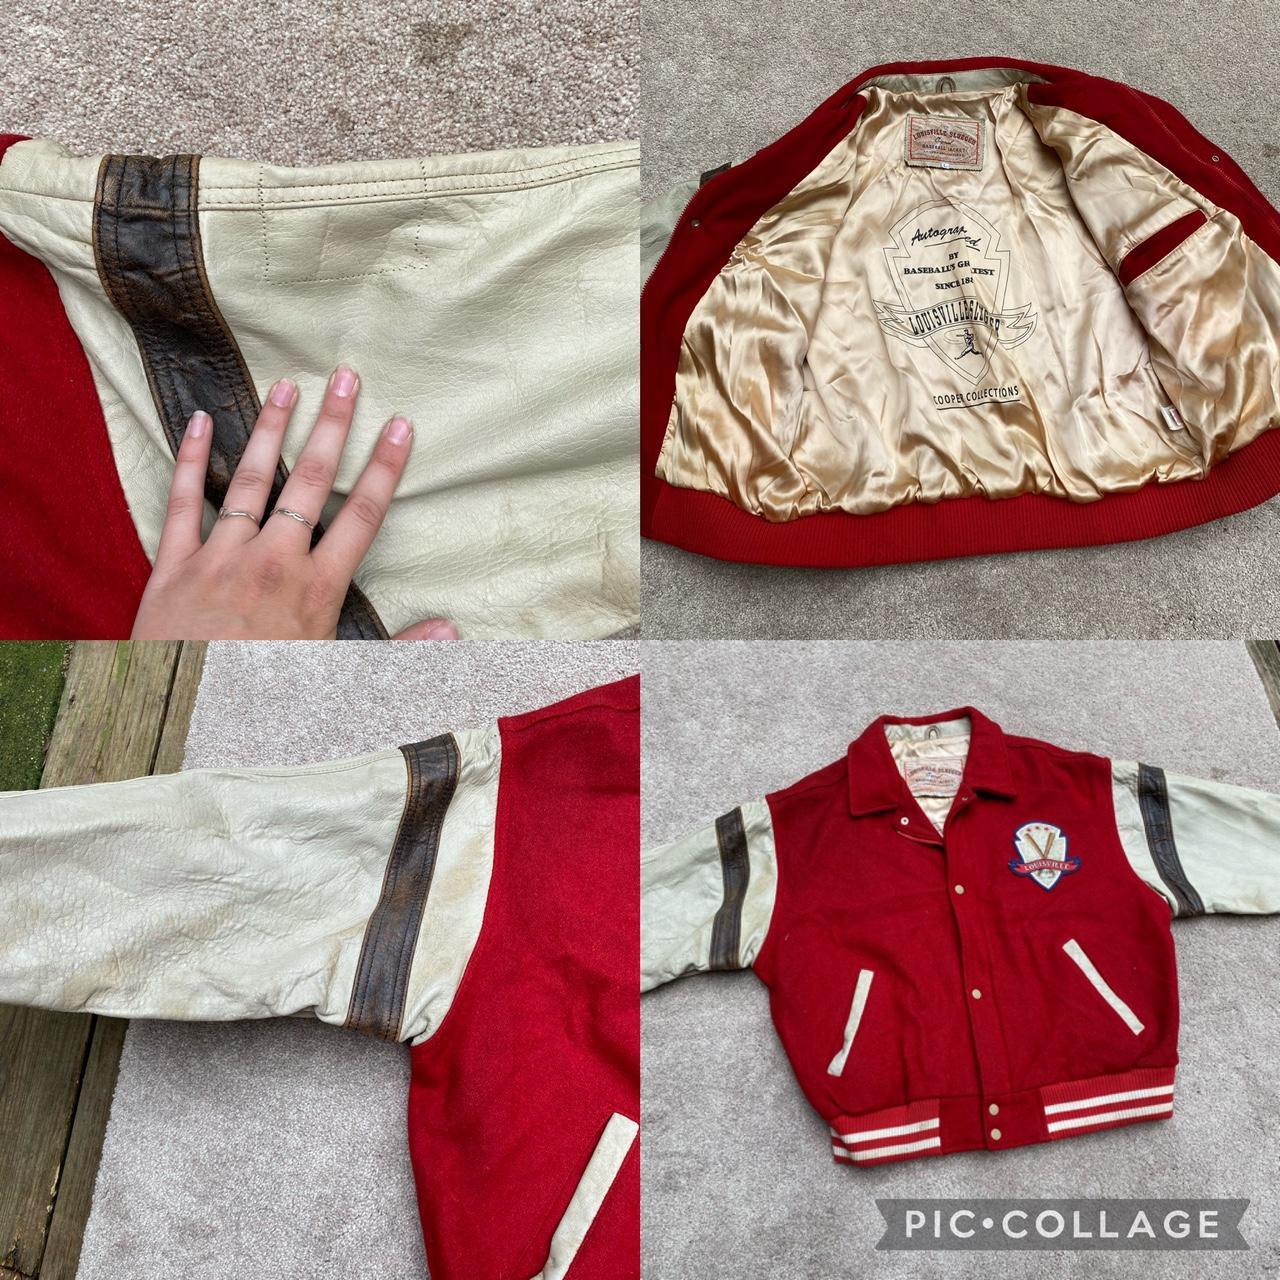 Vintage Louisville Cardinals Jacket Size Small Just - Depop